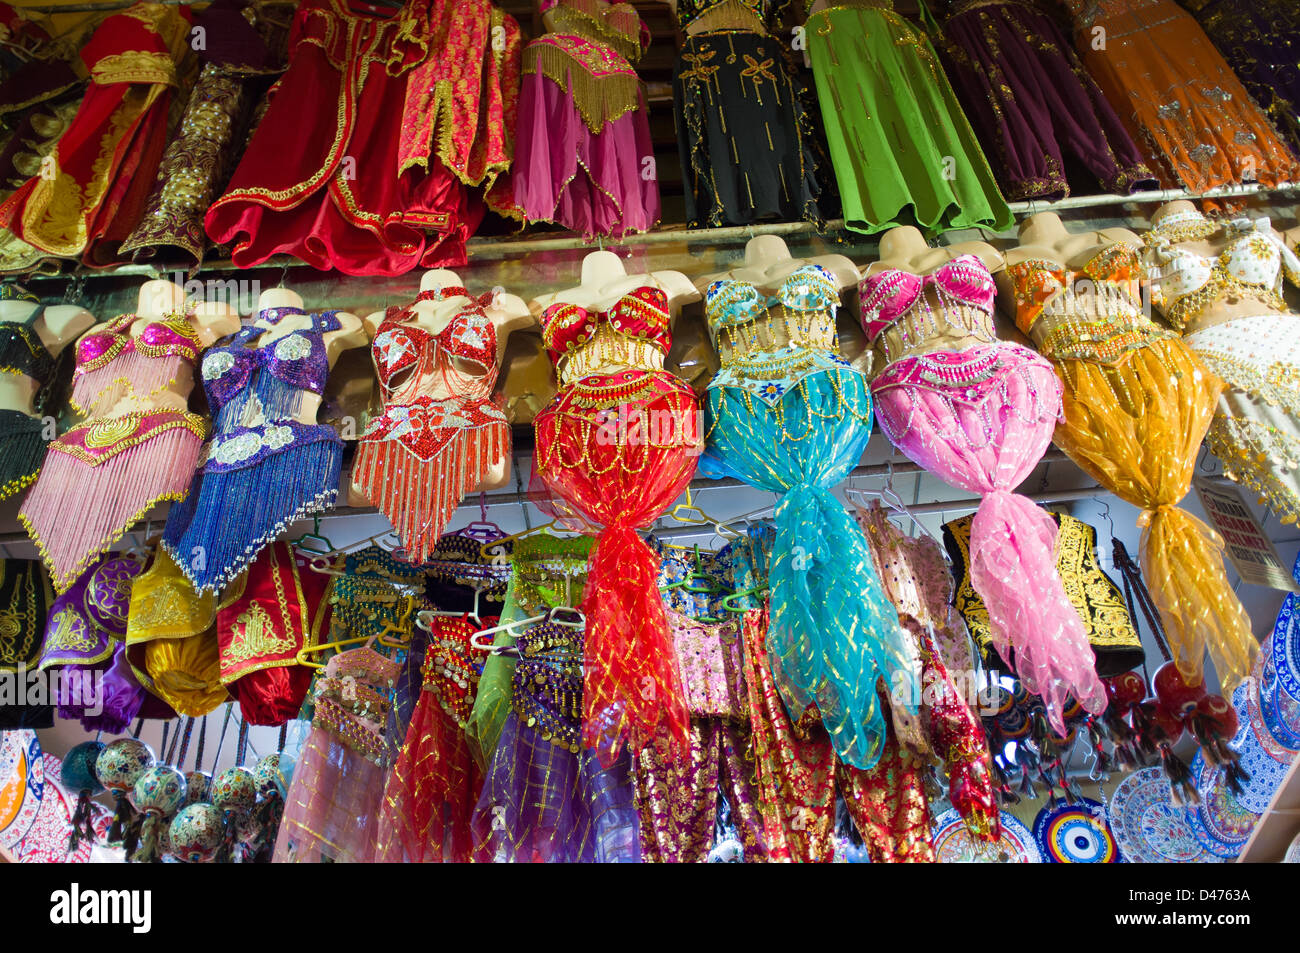 belly dancing dresses, Egyptian Bazaar, Istanbul, Turkey Stock Photo